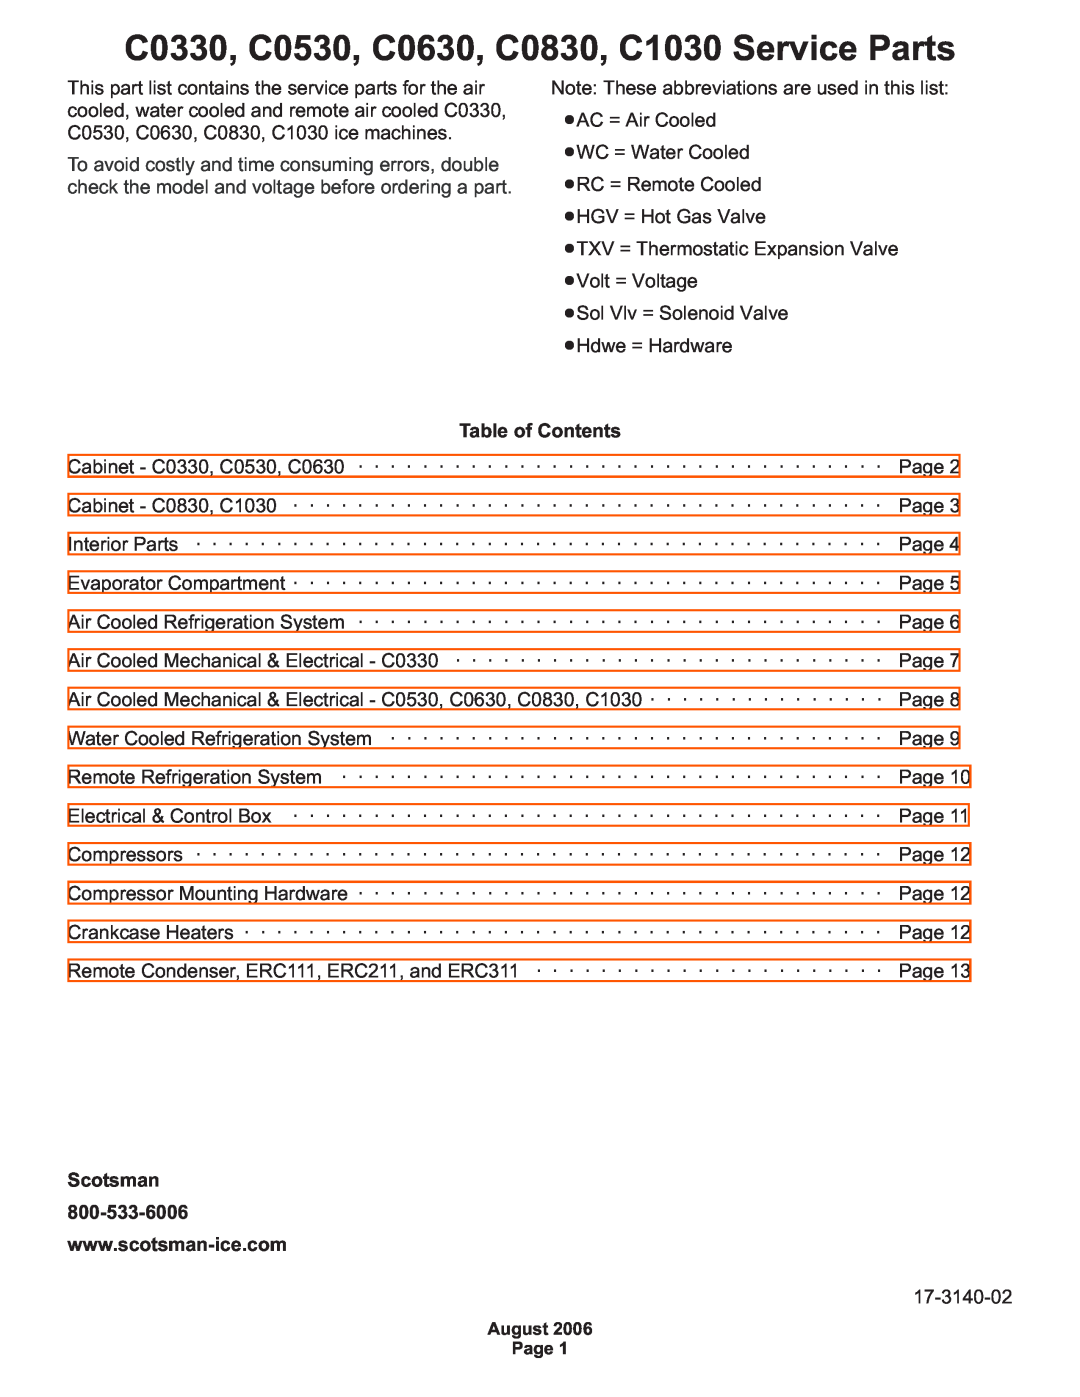 Scotsman Ice manual C0330, C0530, C0630, C0830, C1030 Service Parts, Scotsman 